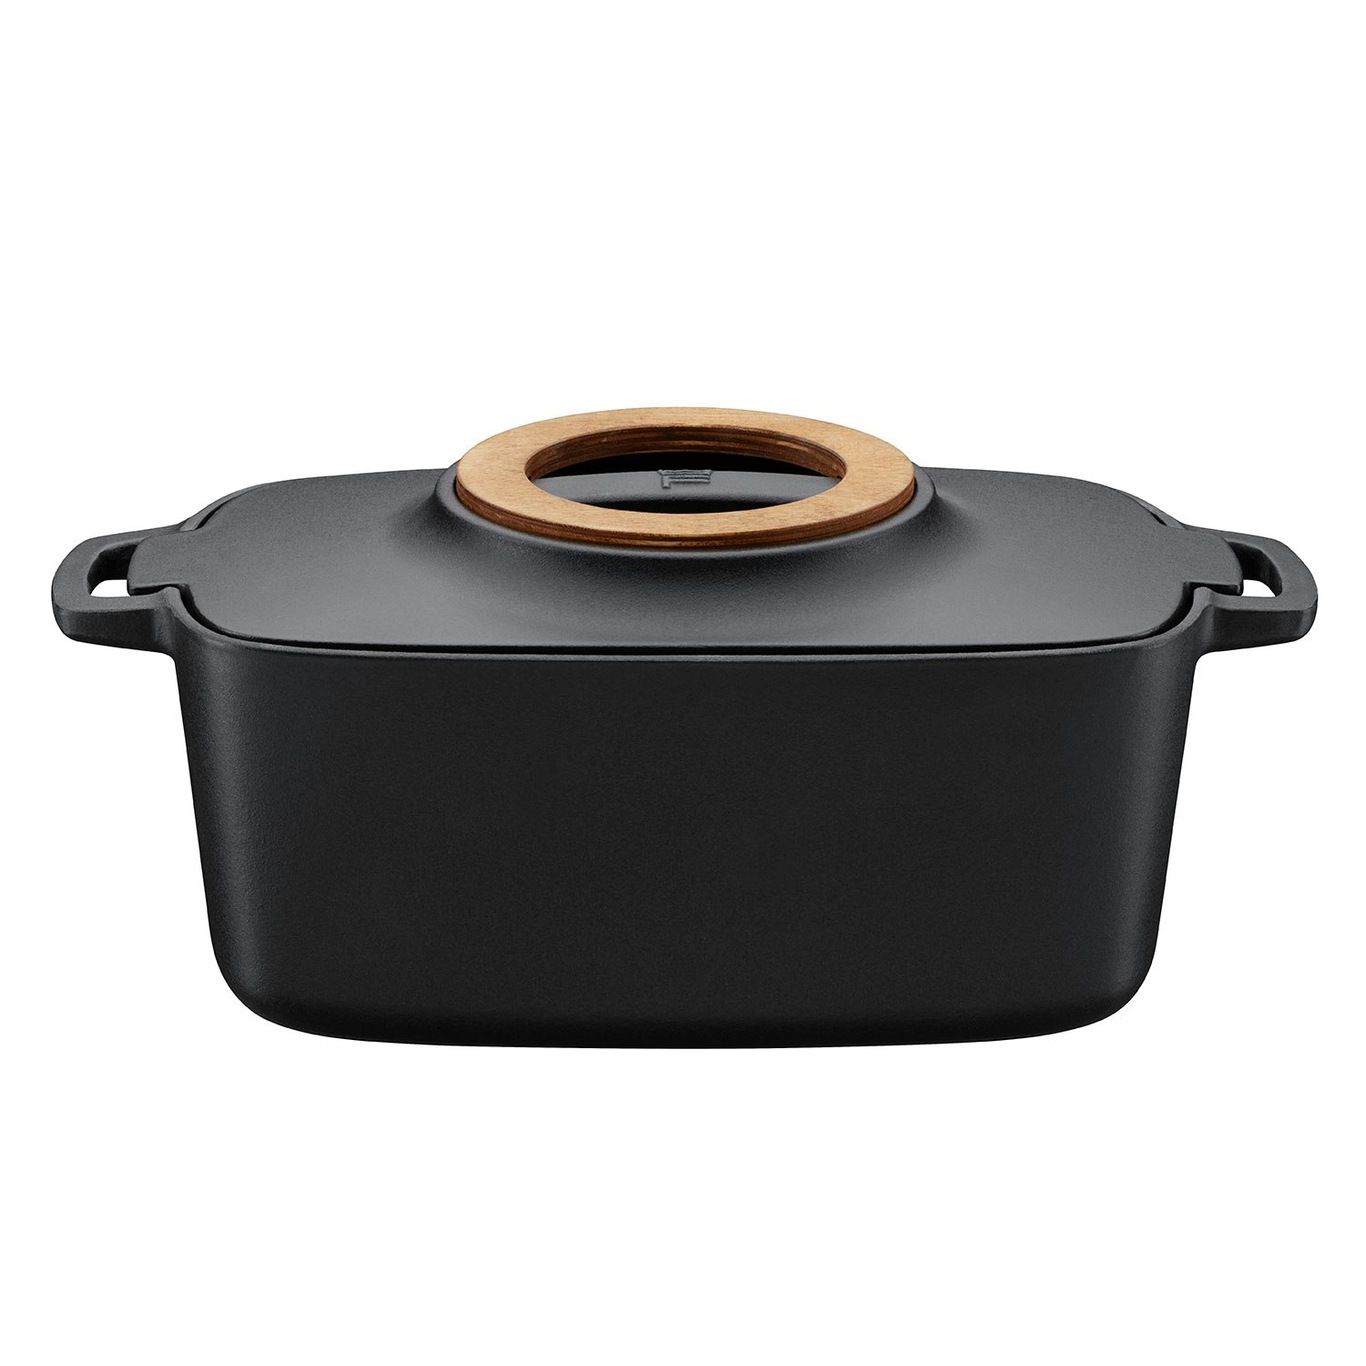 https://royaldesign.com/image/2/fiskars-norden-casserole-oval-cast-iron-5-l-0?w=800&quality=80